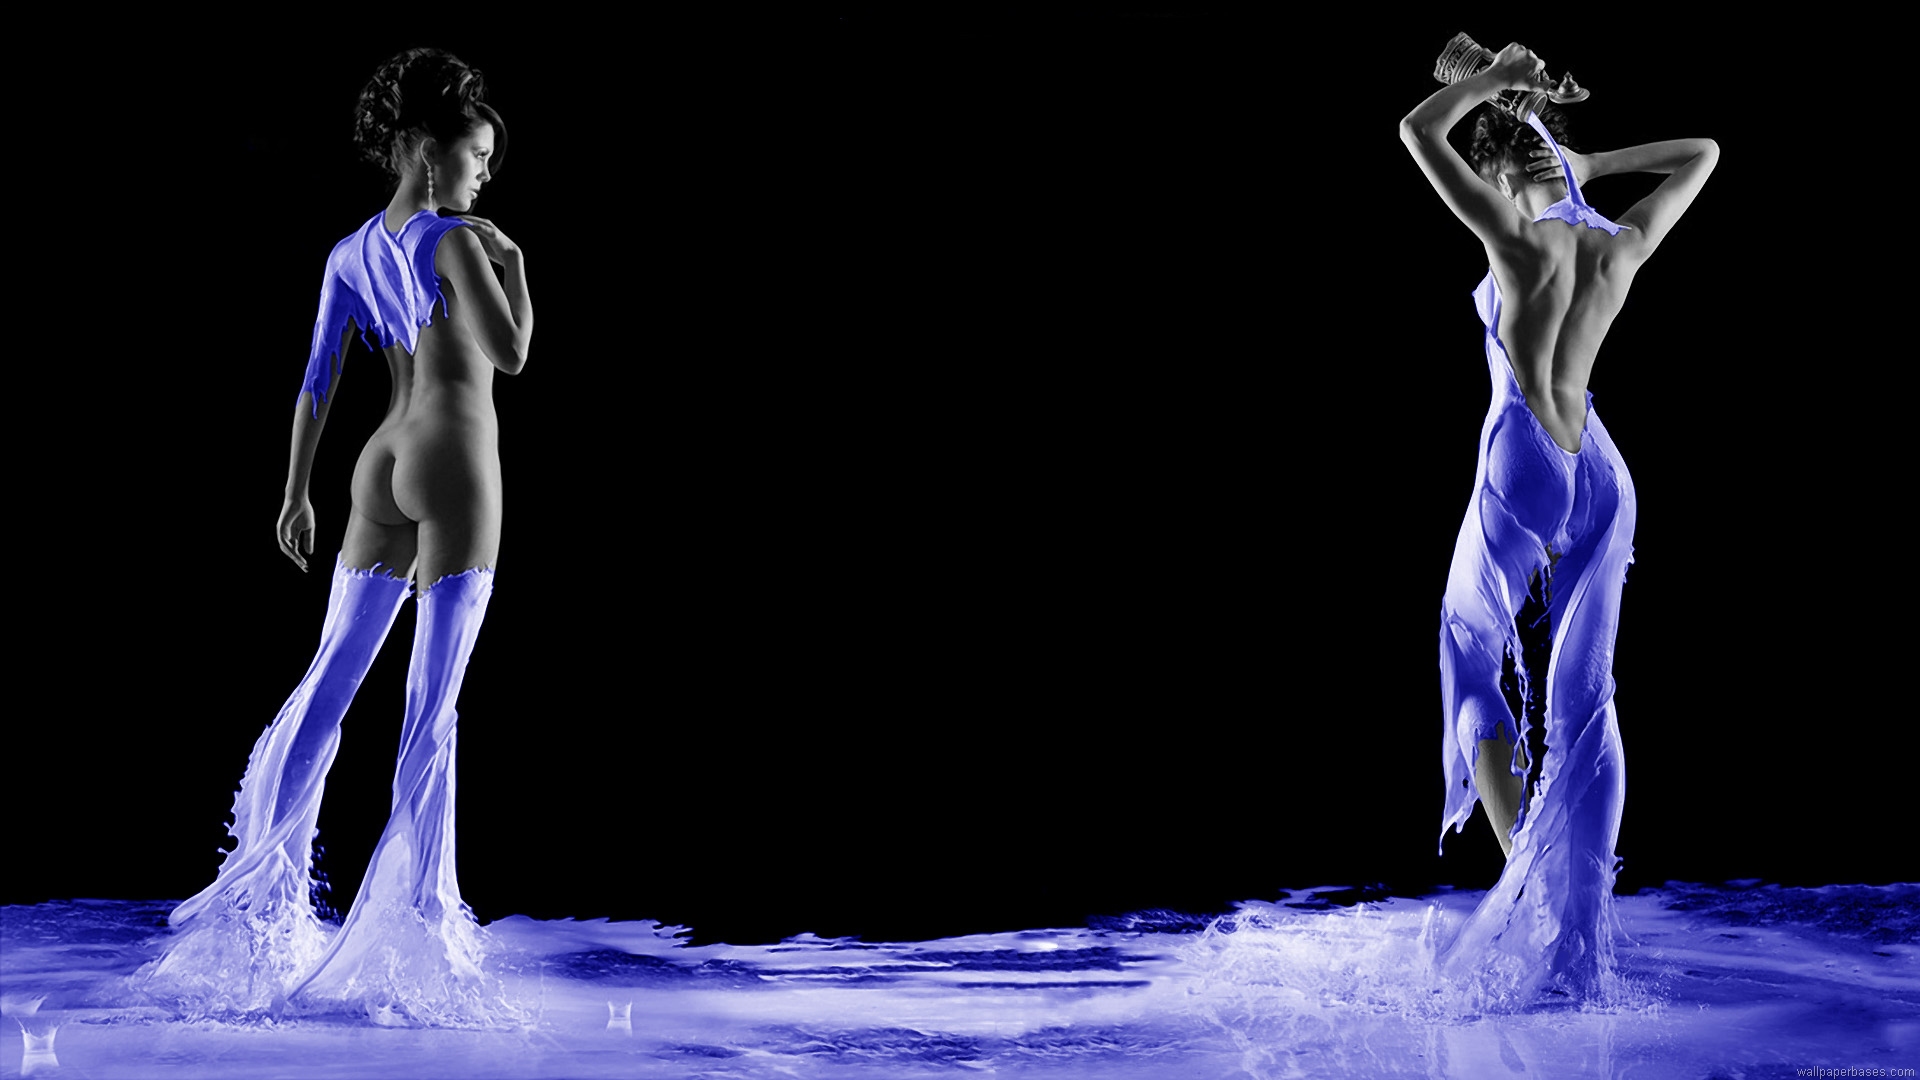 1080 x 1920 픽셀의 hd 월페이퍼,물,춤추는 사람,현대 무용,공연,인간